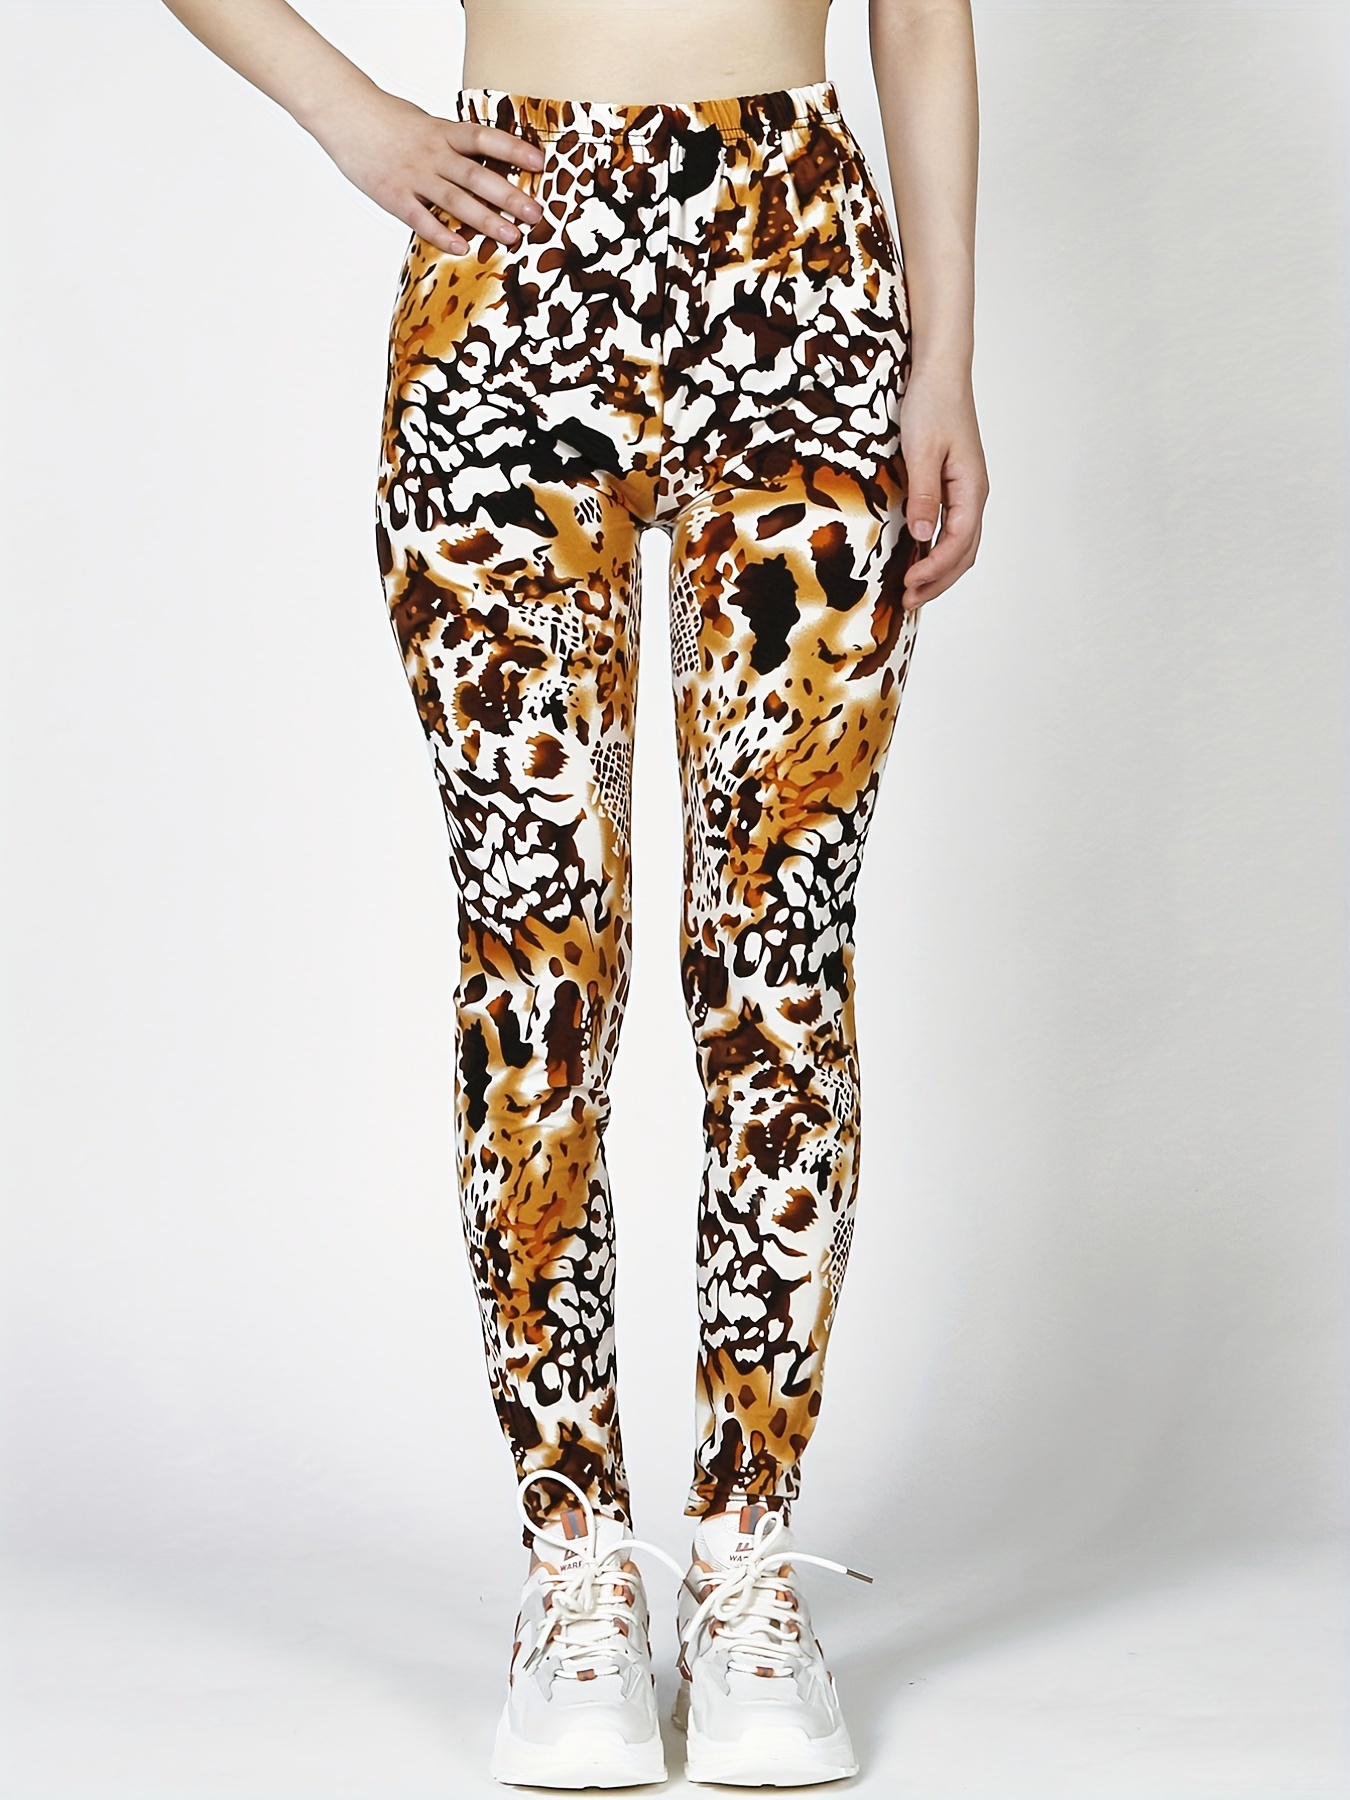 Legging Leggens-Leopardo Neon-Zebra Multicolores e Calça d